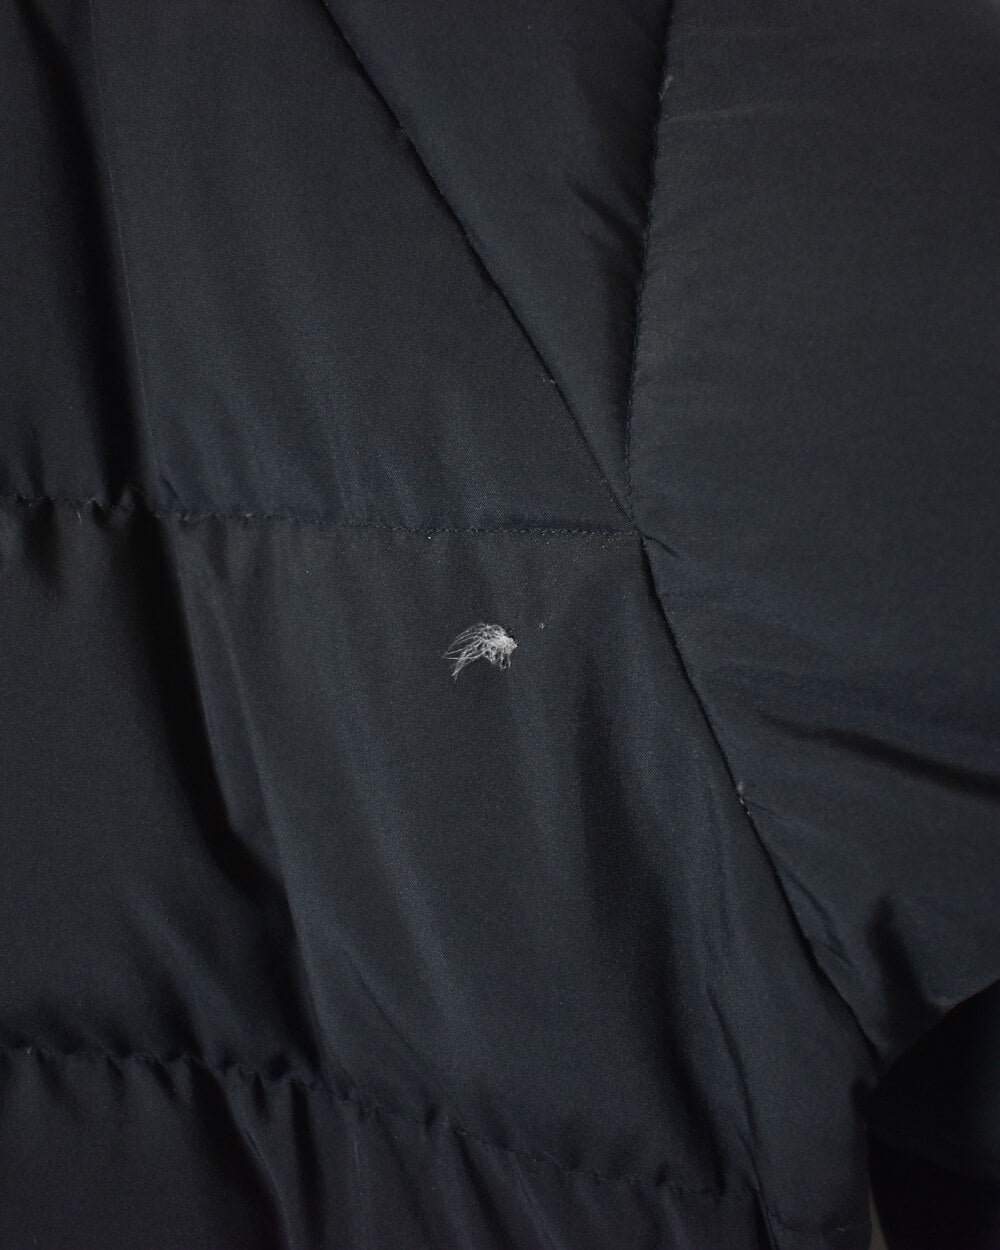 Black Fila Puffer Jacket - XX-Large